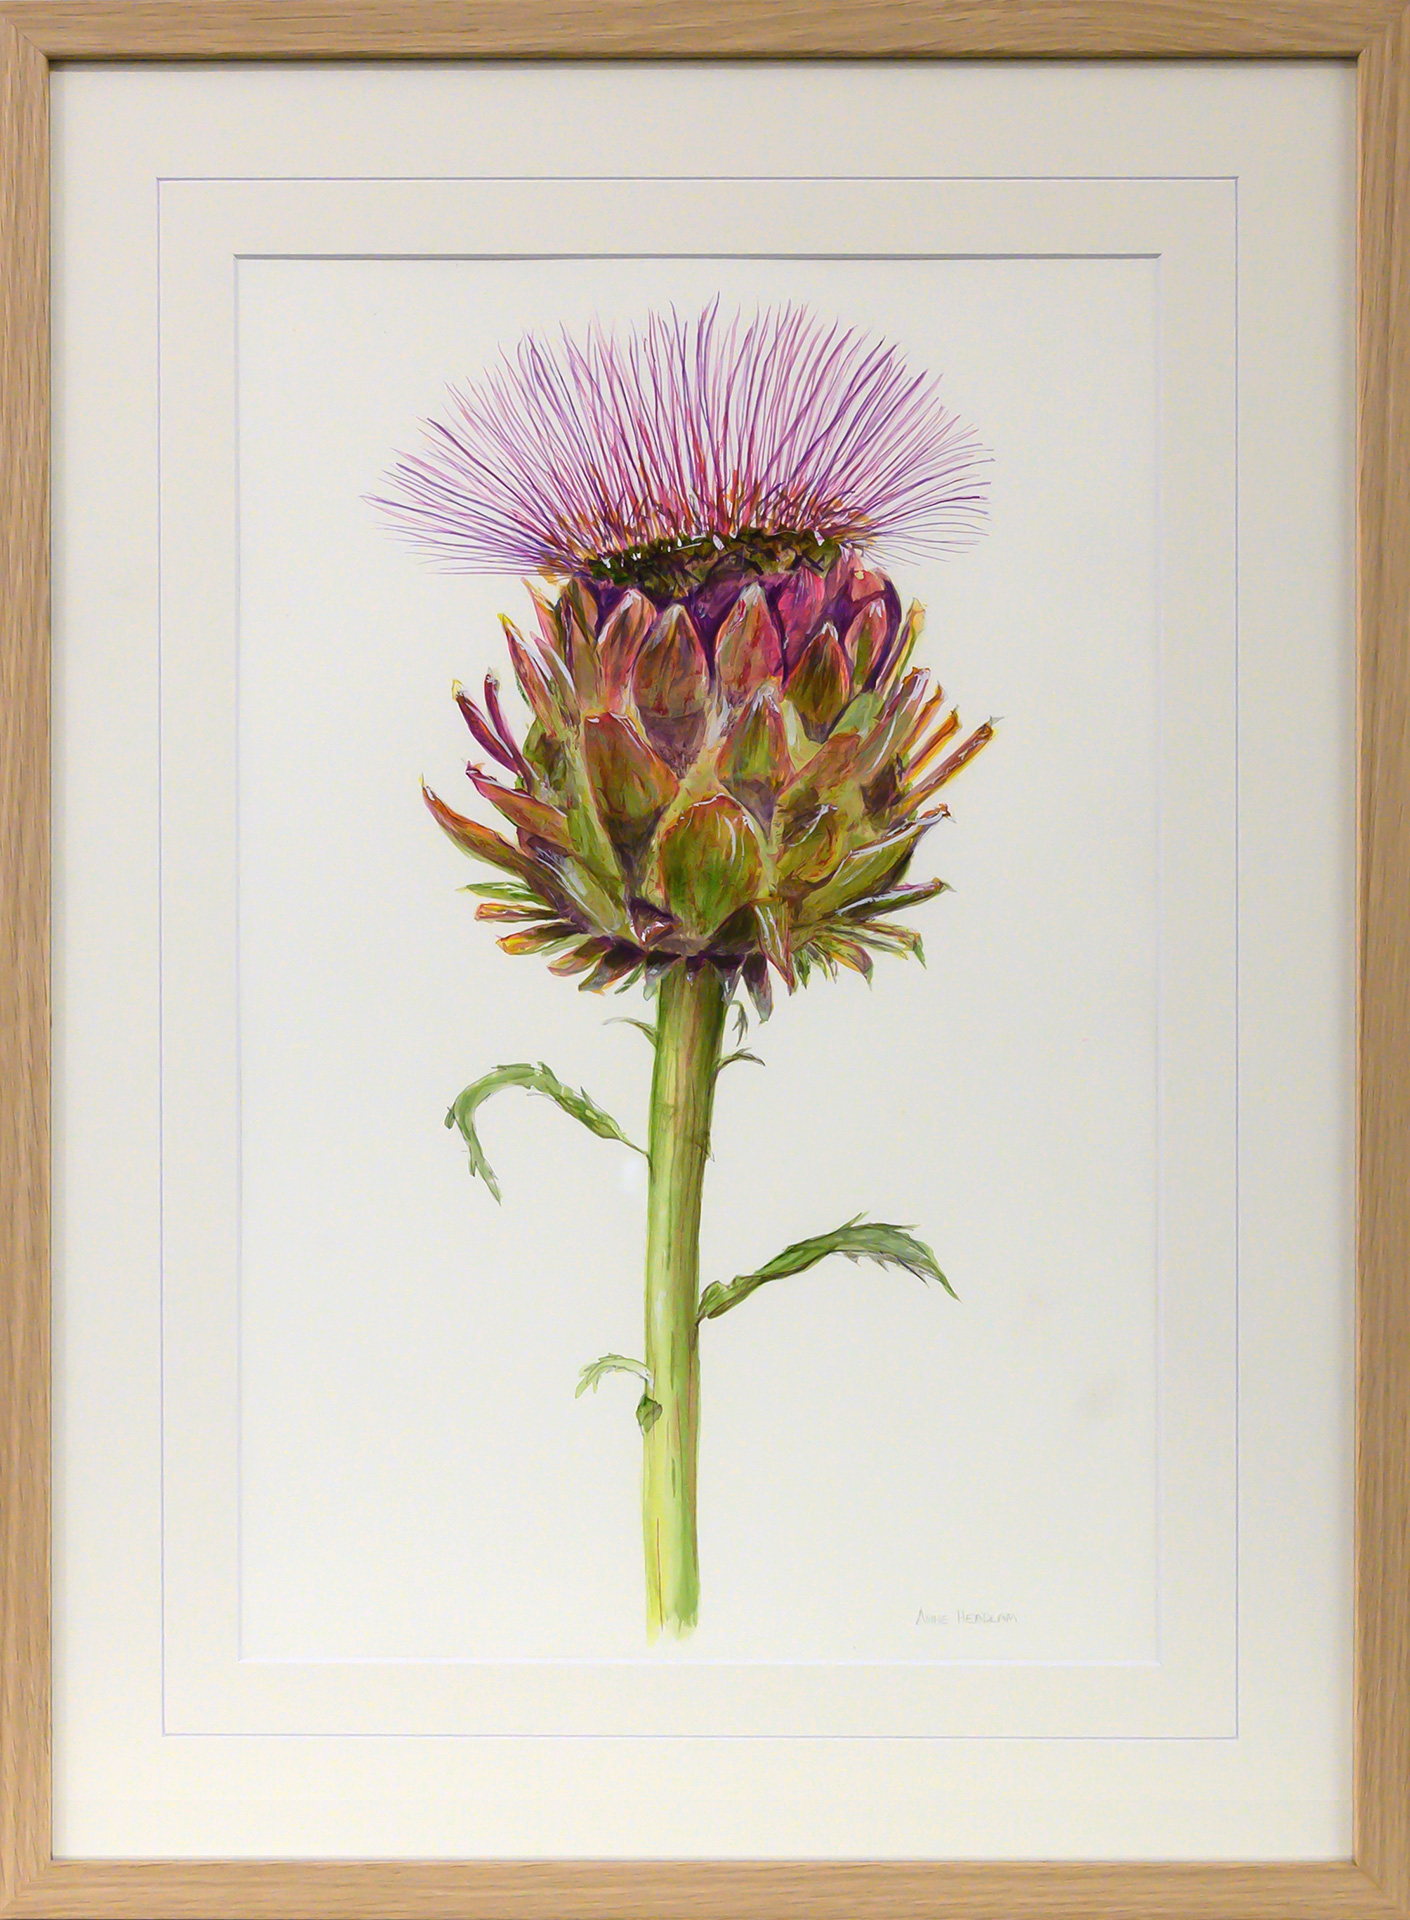 Framed artwork of a purple artichoke thistle by Anne Headlam